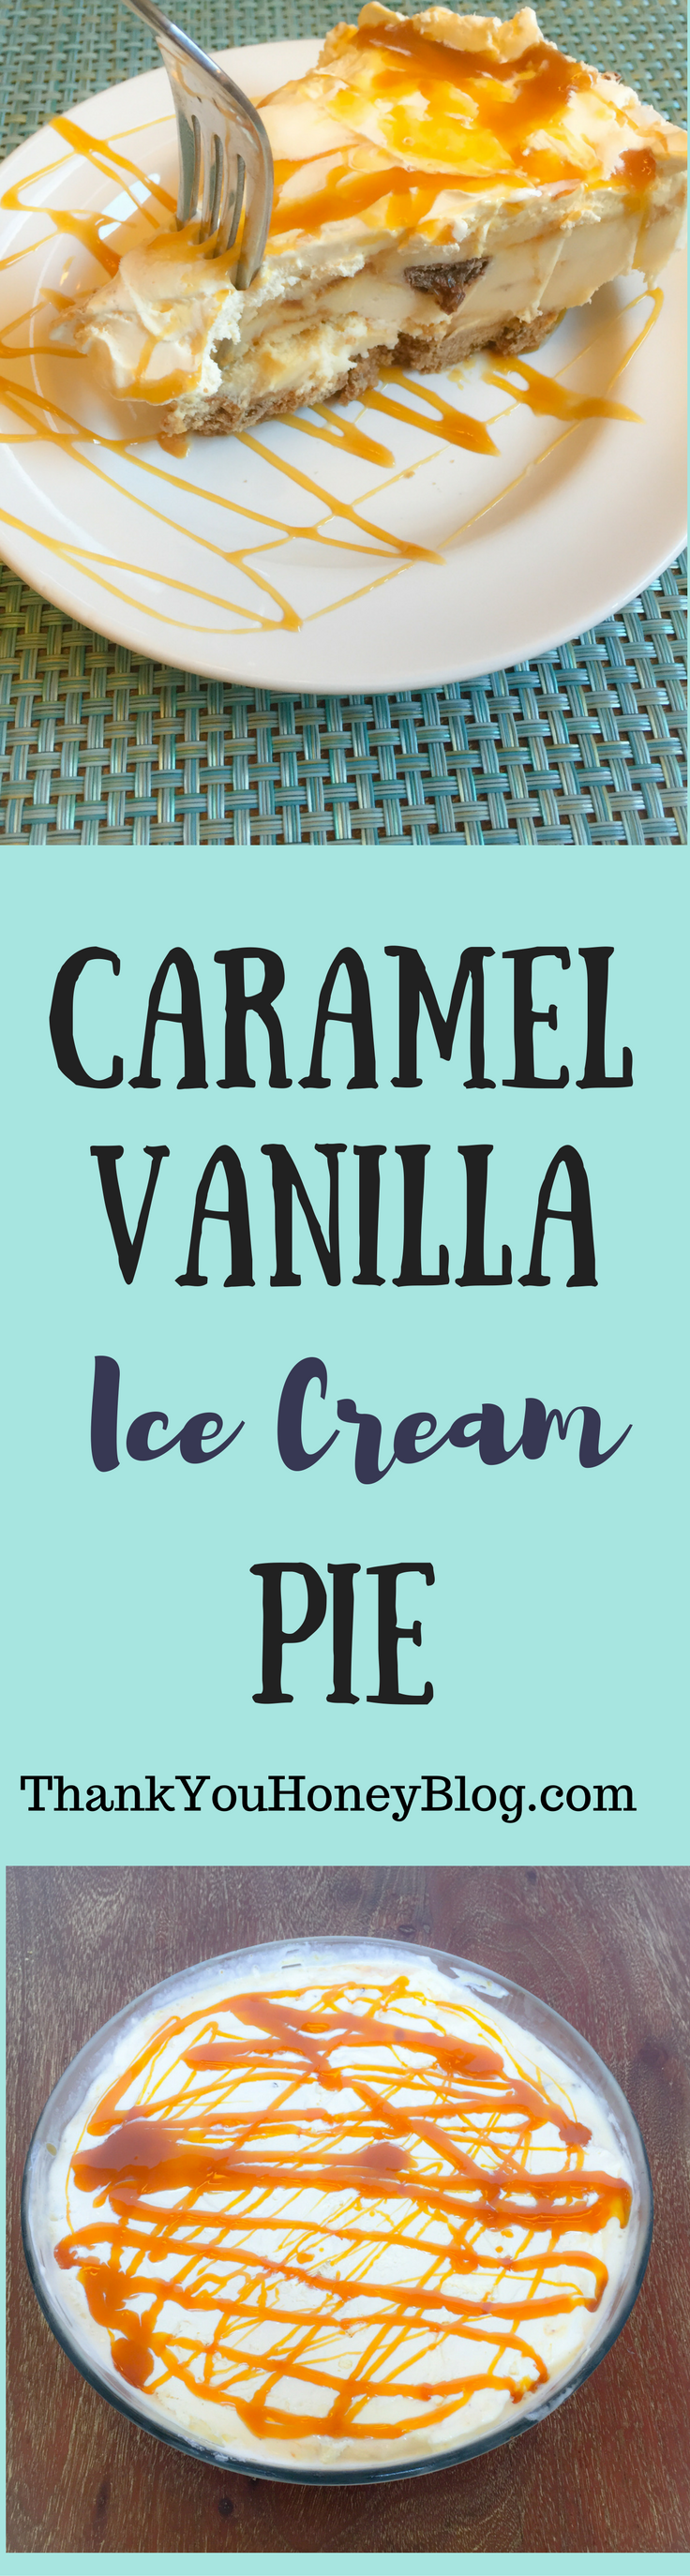 Caramel Vanilla Ice Cream Pie #MayfieldFamily {ad}